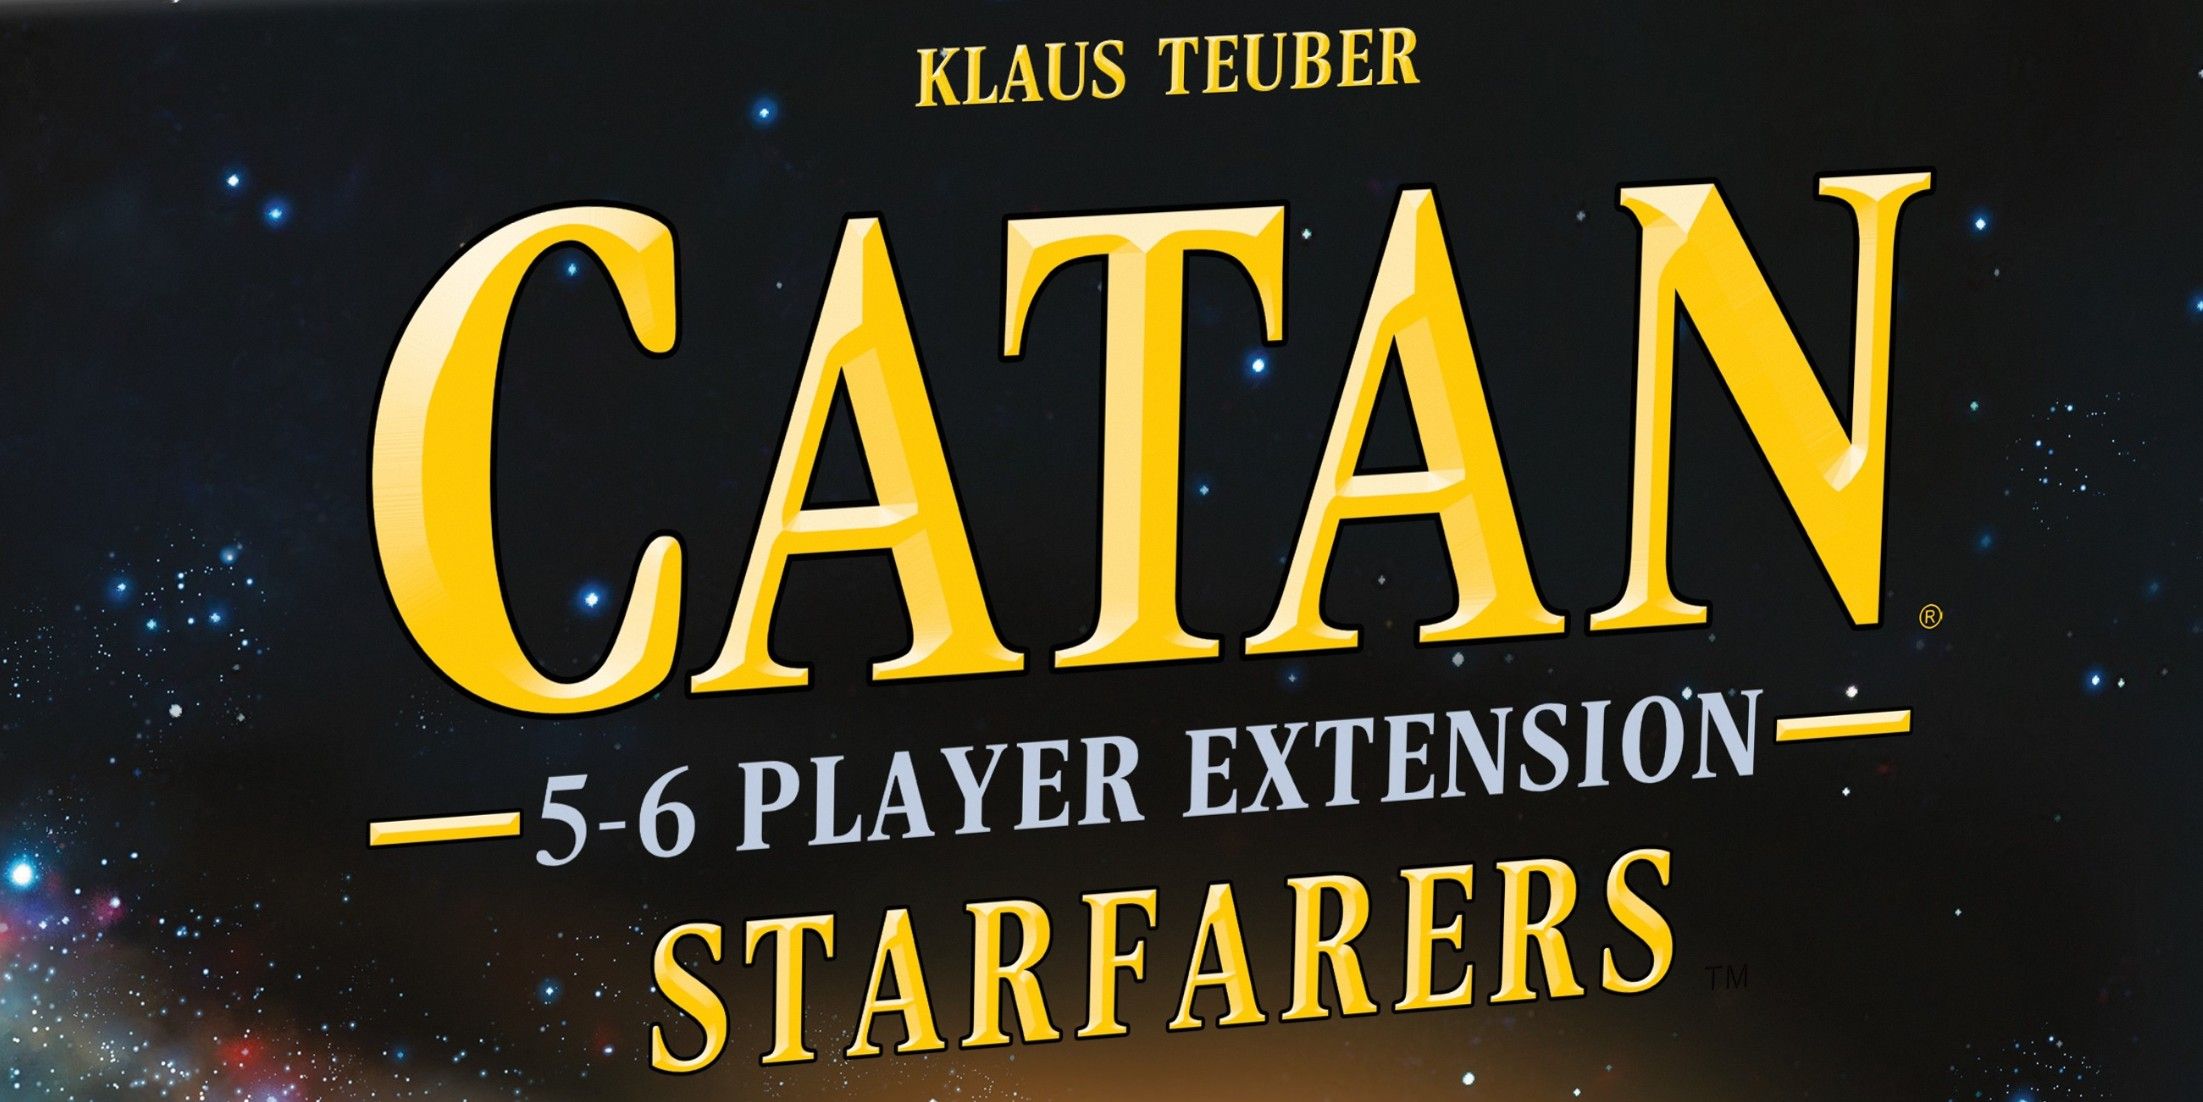 Catan Starfarers 5-6 Player Extension title